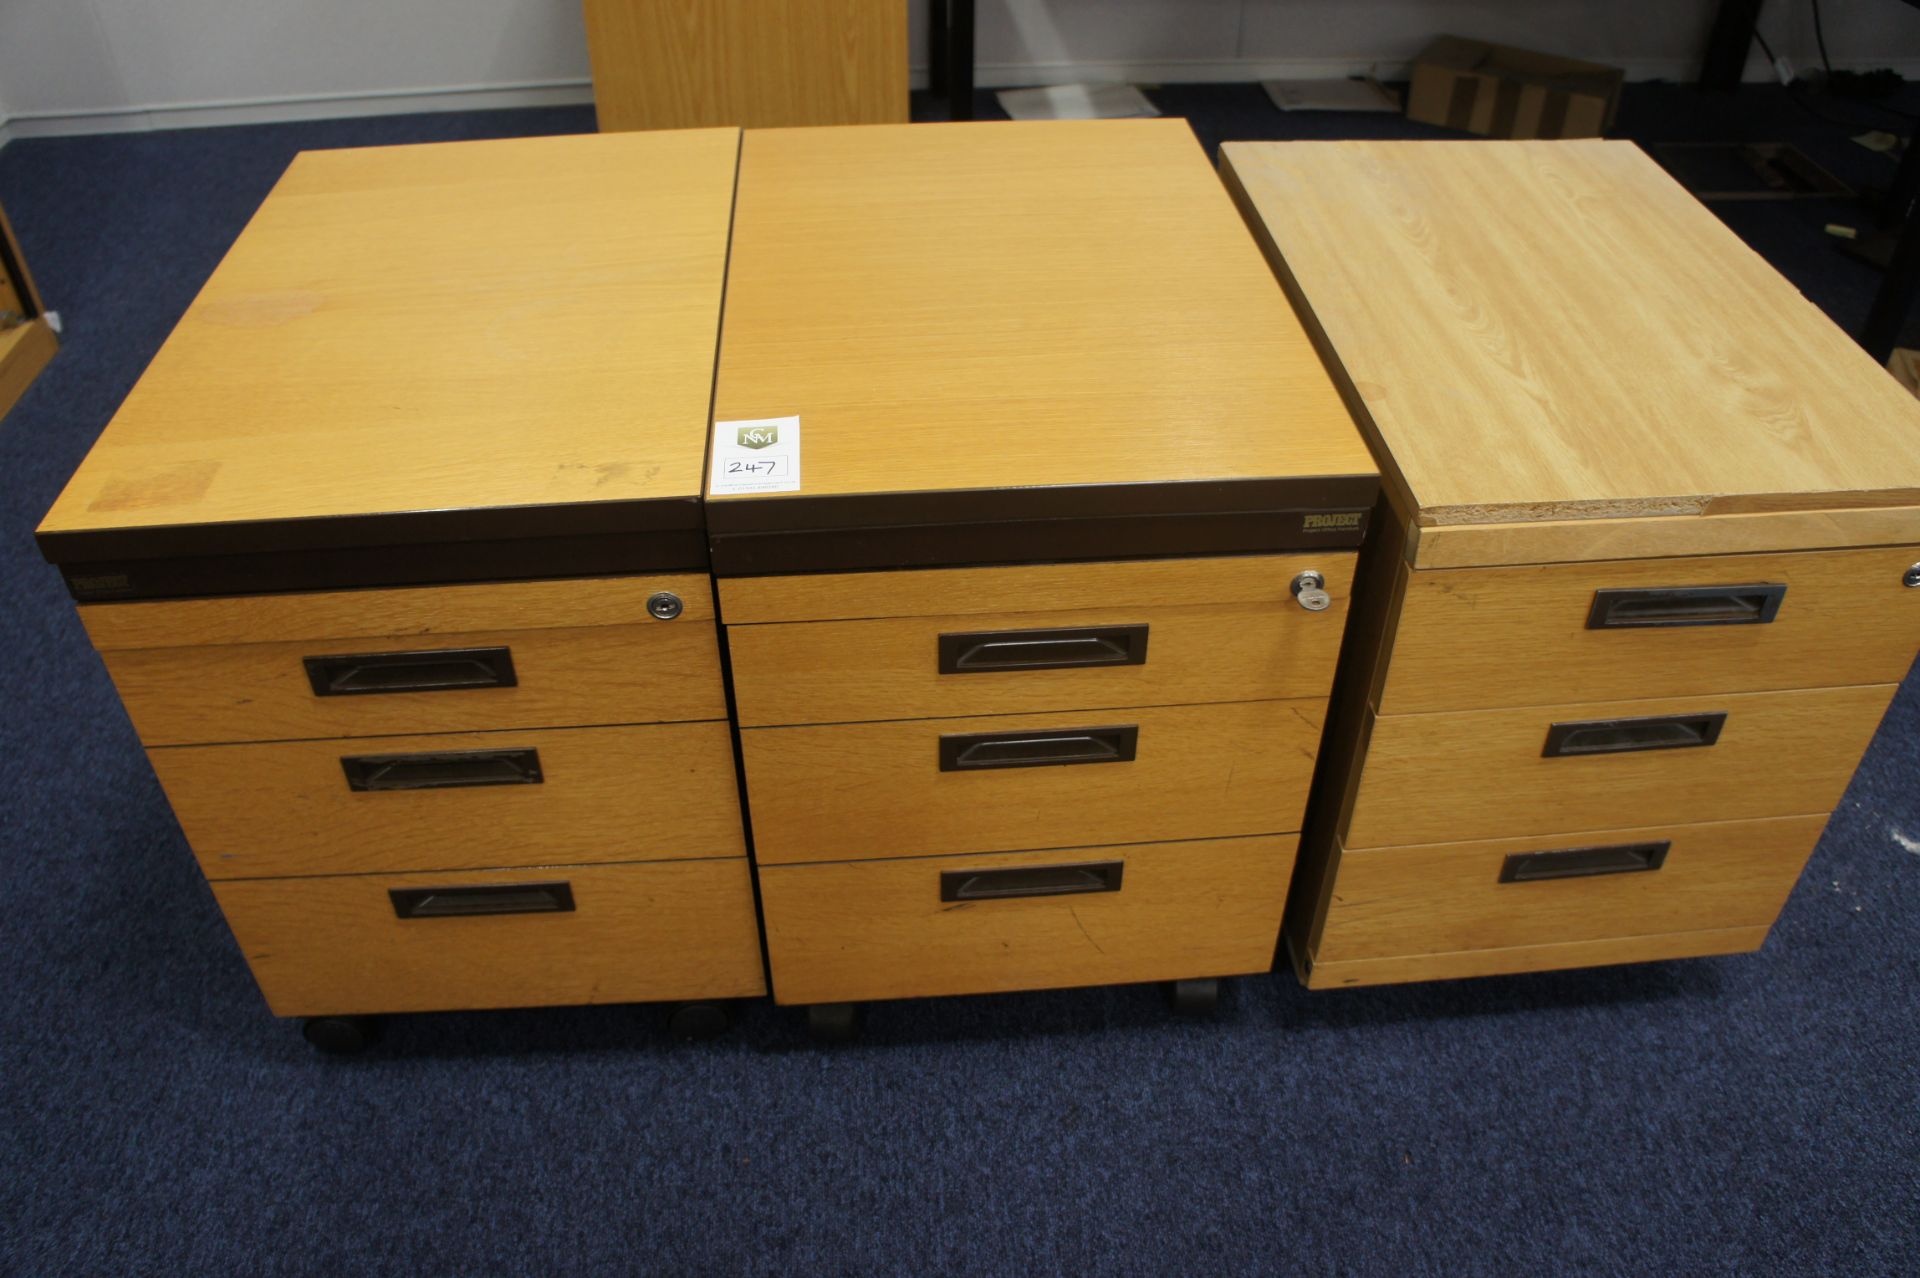 3 x 3 drawer pedestals - Image 2 of 2